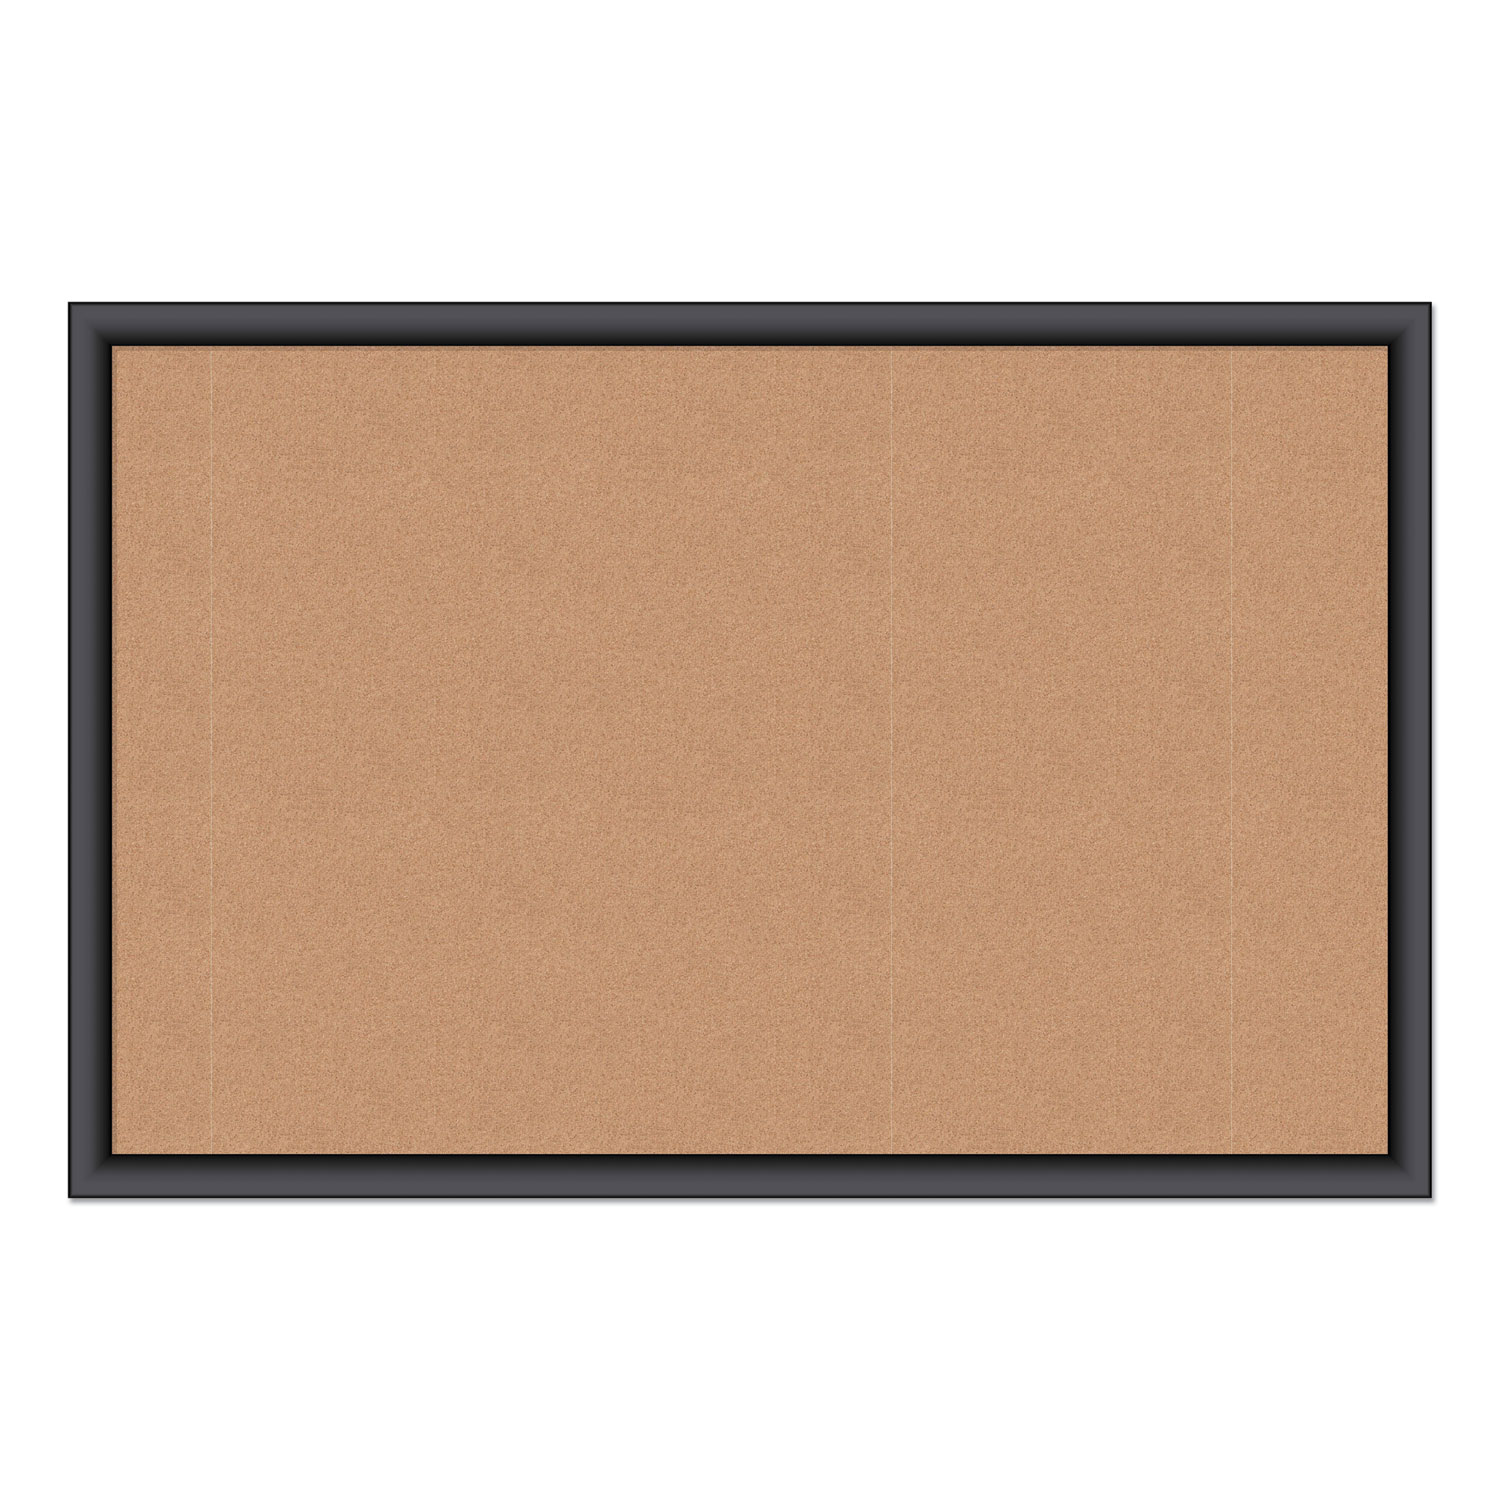 U Brands Cork Bulletin Board, 36 x 24, Natural Surface, Black Frame